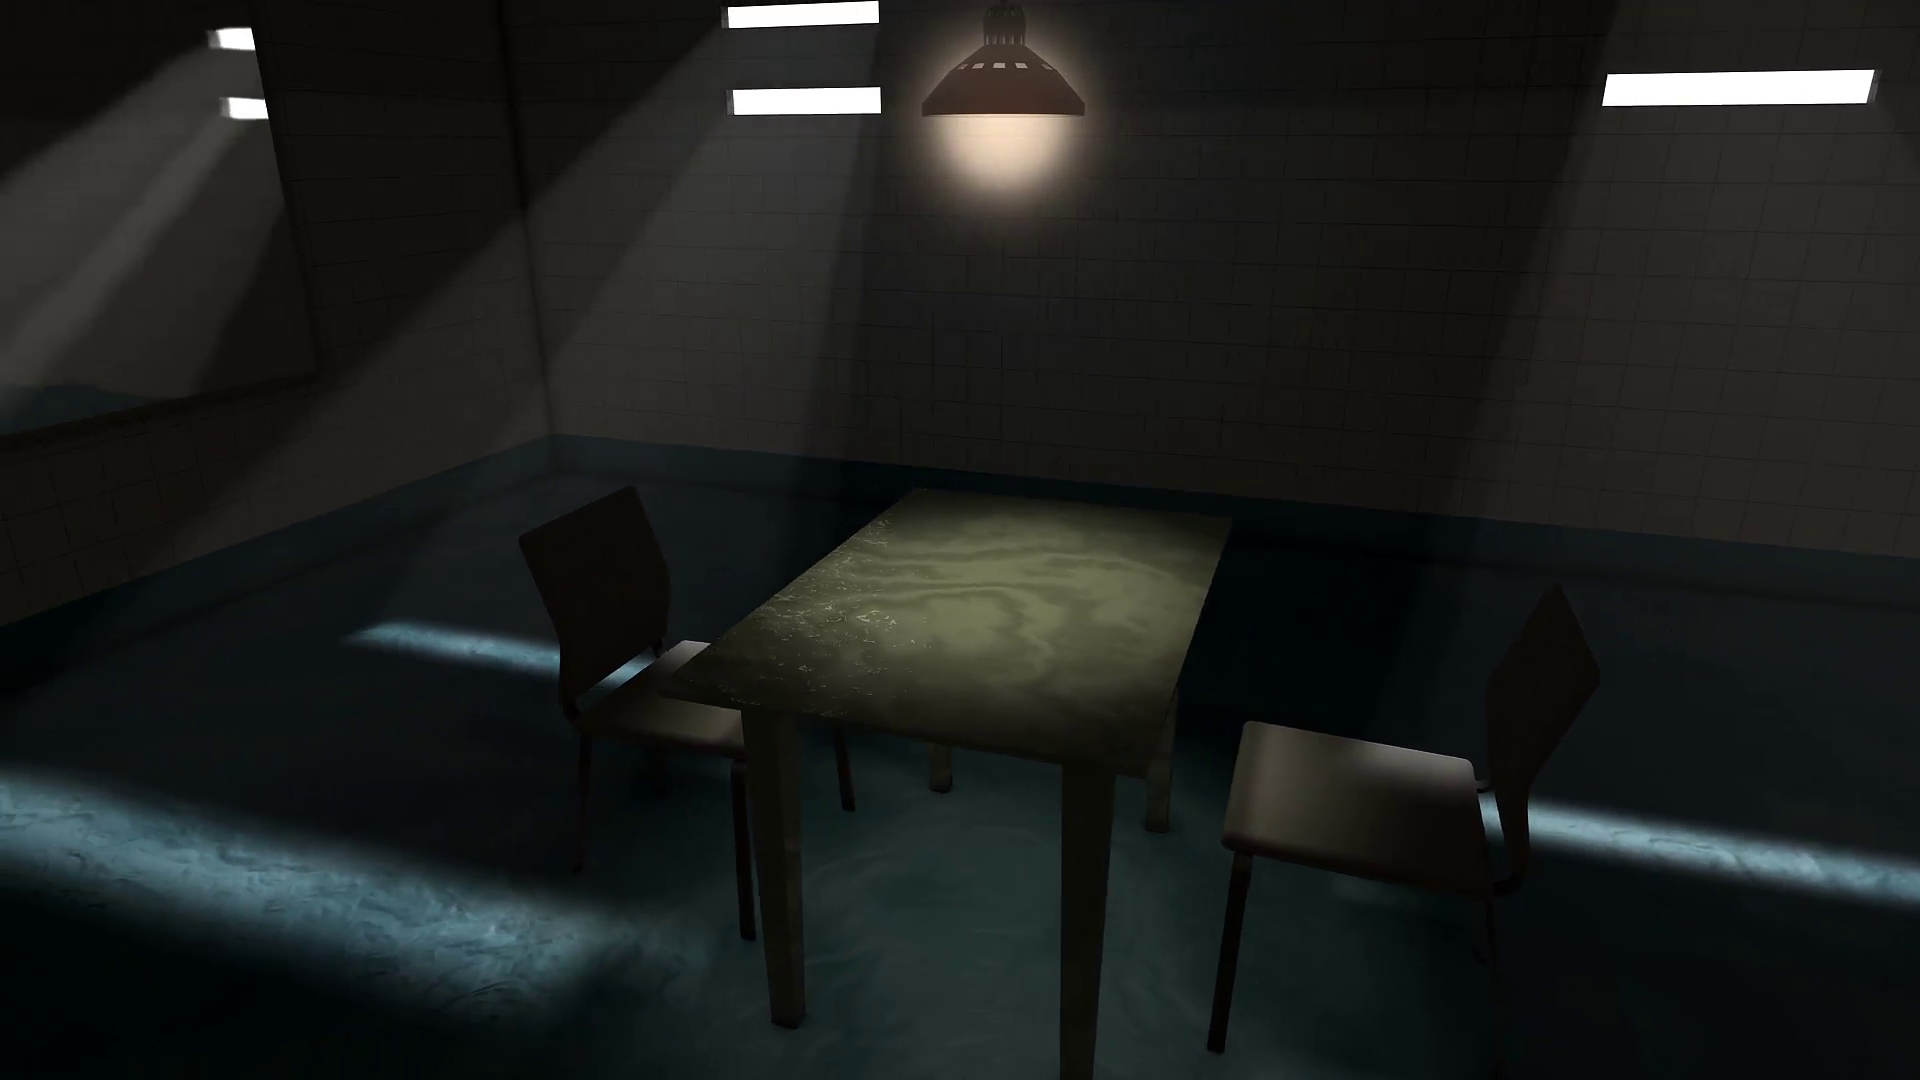 interrogation-room-police-suspect-questioning_xkktbk1___F0000.png